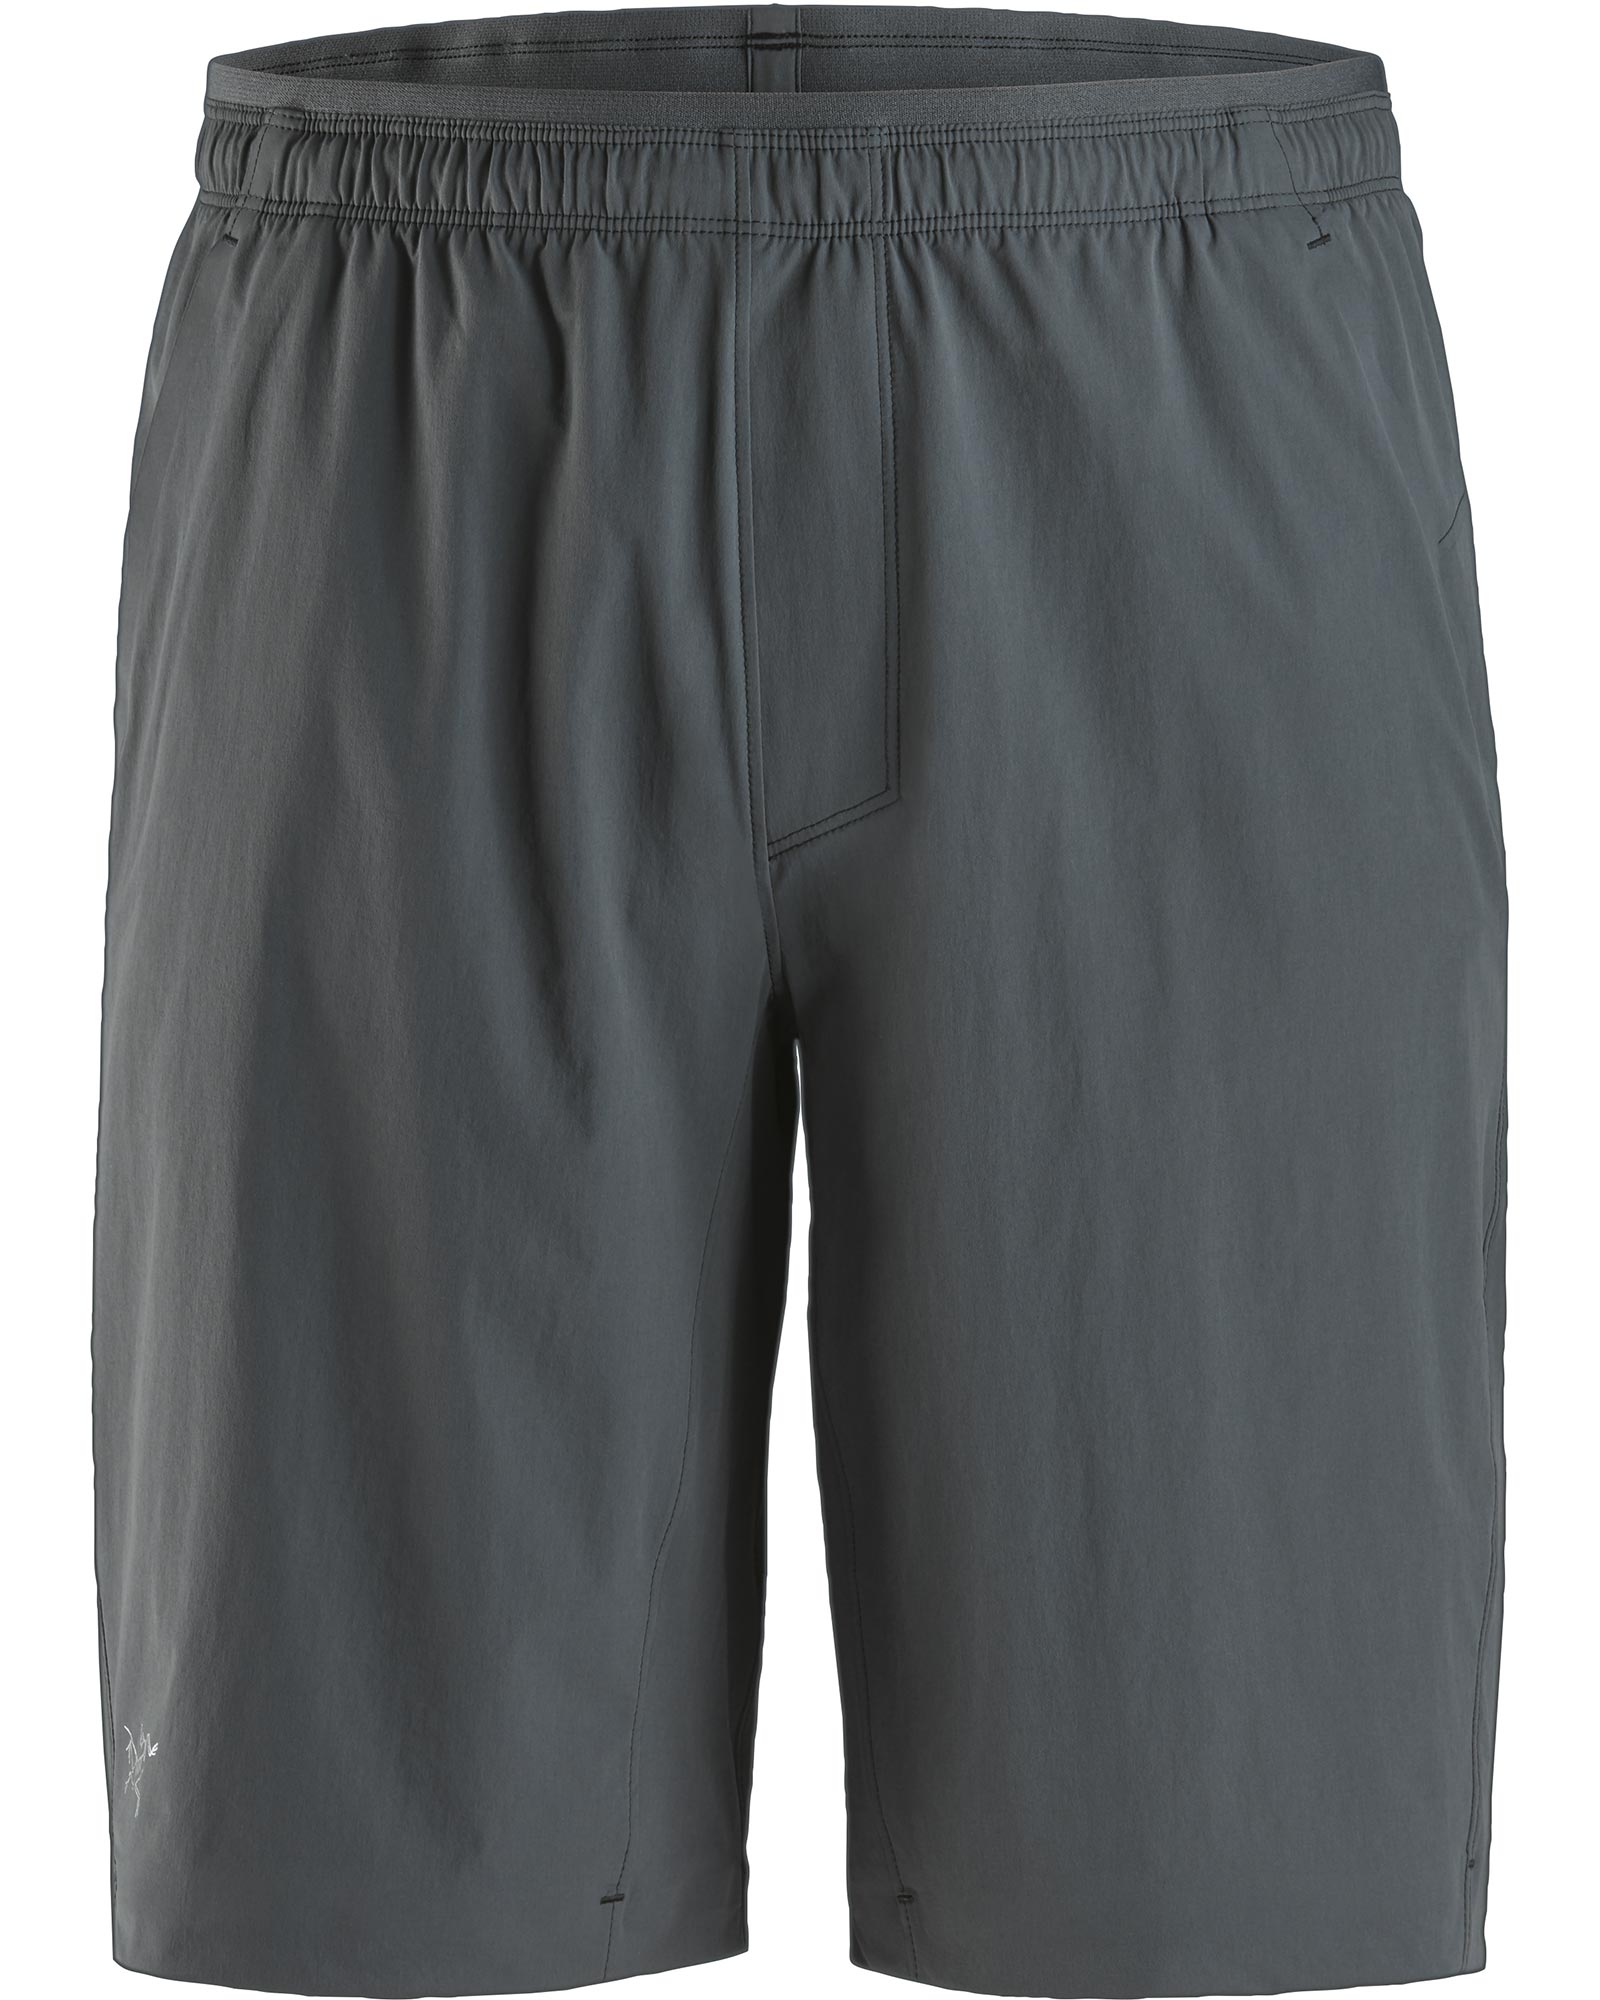 Arc'teryx Men's Aptin Shorts